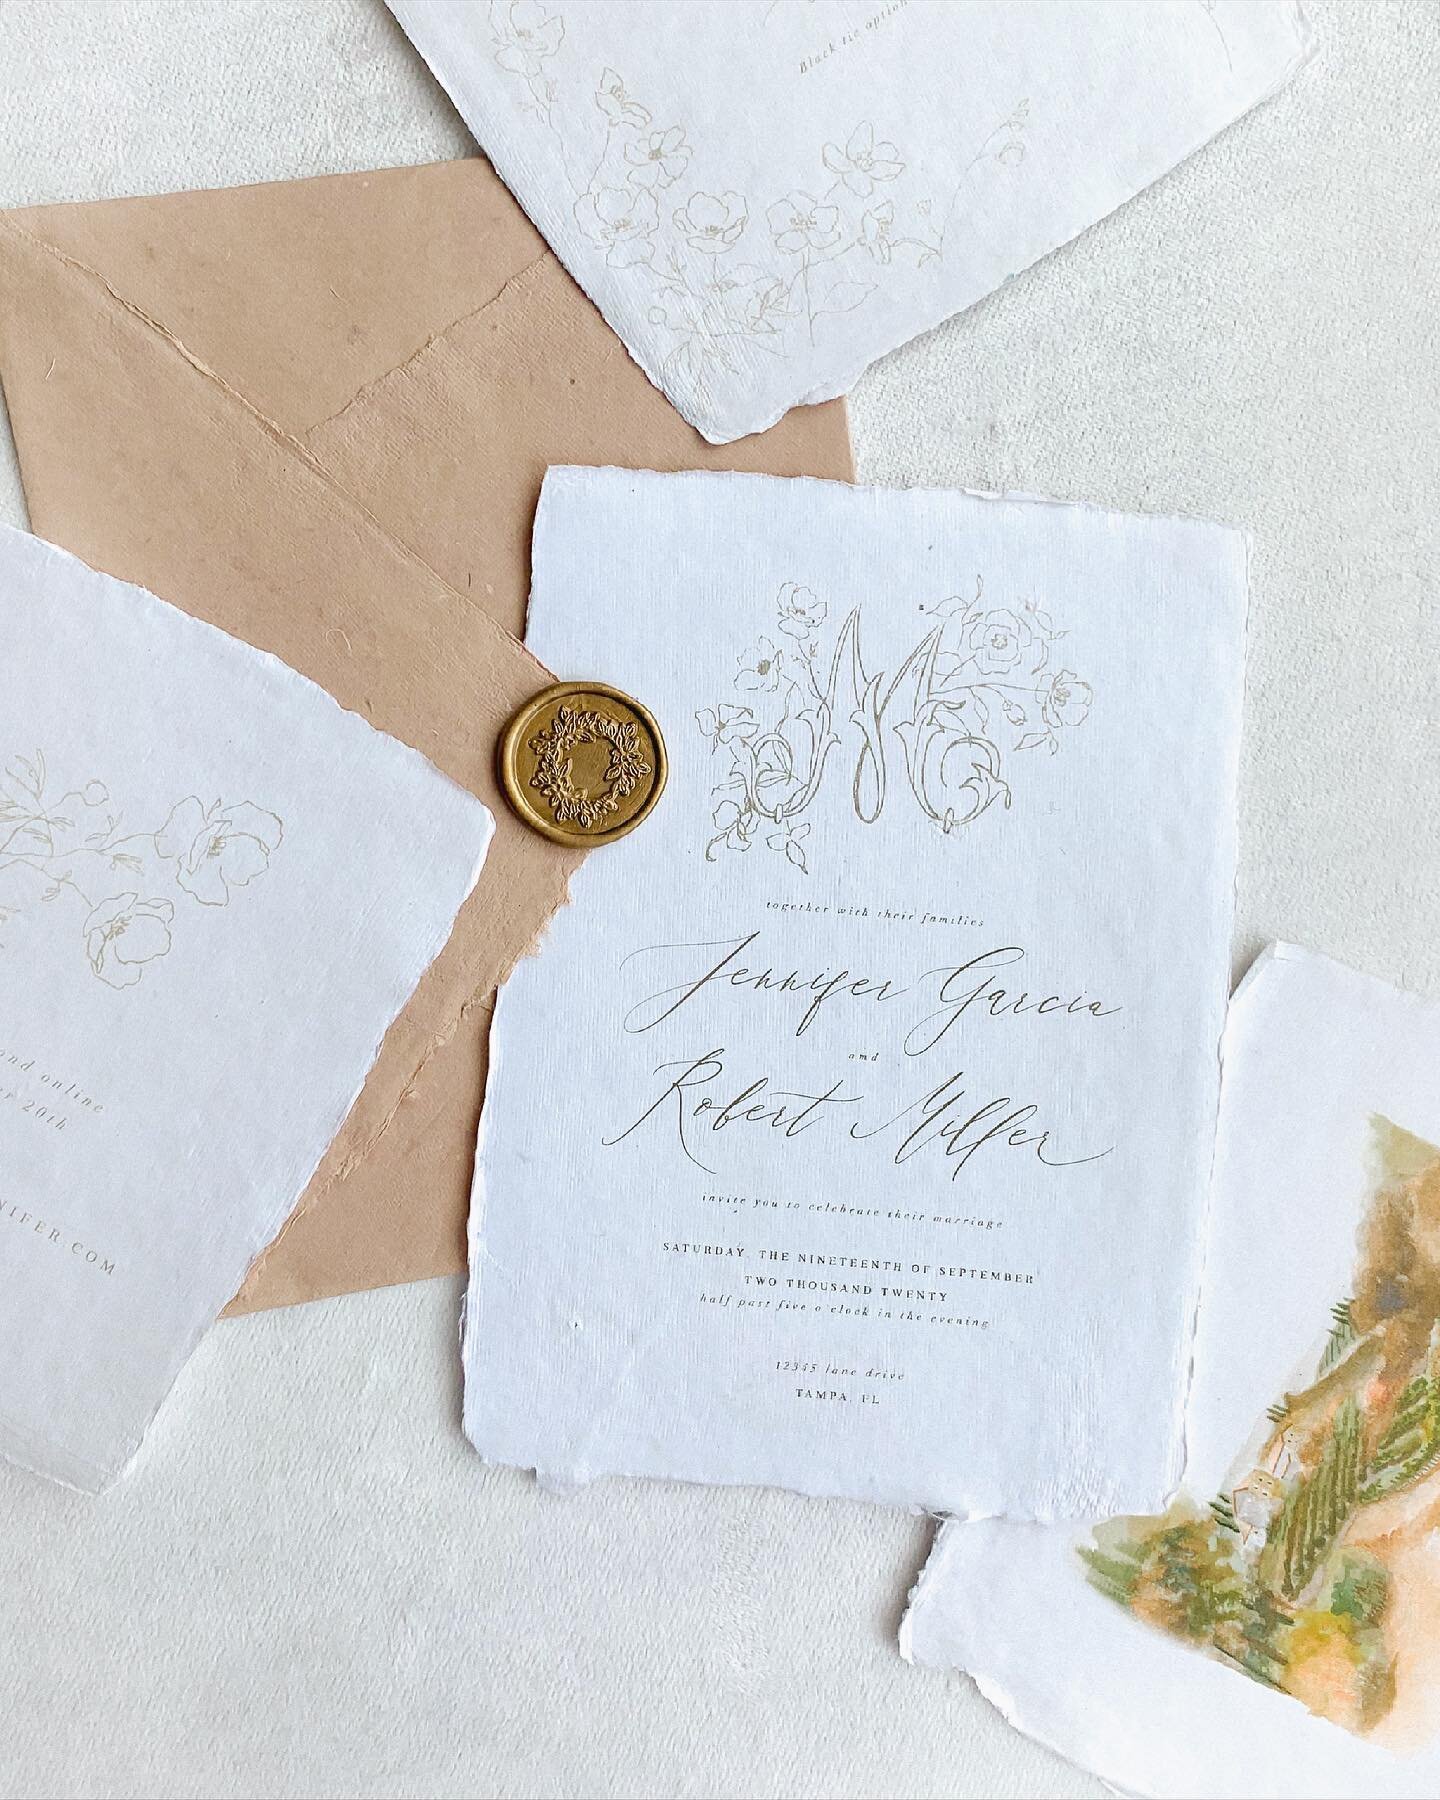 Sending samples to @thestudiomagnolia to photograph 🤗 

What do you guys think of this floral line-drawing monogram? 

.
.
.
.
#weddinginspiration&nbsp;#weddingplanning&nbsp;#handmadepaper&nbsp;#engaged&nbsp;#fineartwedding&nbsp;#fineartinvitations&nbsp;#letterpresslove&nbsp;#handmadepaperinvitations&nbsp;#stationerydesign&nbsp;#invite&nbsp;#dailydoseofpaper&nbsp;#weddinginvitations&nbsp;#organicwedding&nbsp;#weddingtrends&nbsp;#simpleweddinginvitation&nbsp;#weddinginvitationdesigner&nbsp;#destinationwedding&nbsp;#bridetobe&nbsp;#invitations&nbsp;#stationery&nbsp;#letterpressprinting&nbsp;#handmade&nbsp;#weddinginvites&nbsp;#paperlove&nbsp;#decklededge&nbsp;#simplewedding&nbsp;#letterpress&nbsp;#weddingstationery&nbsp;#luxurywedding&nbsp;#weddinginvitationdesign